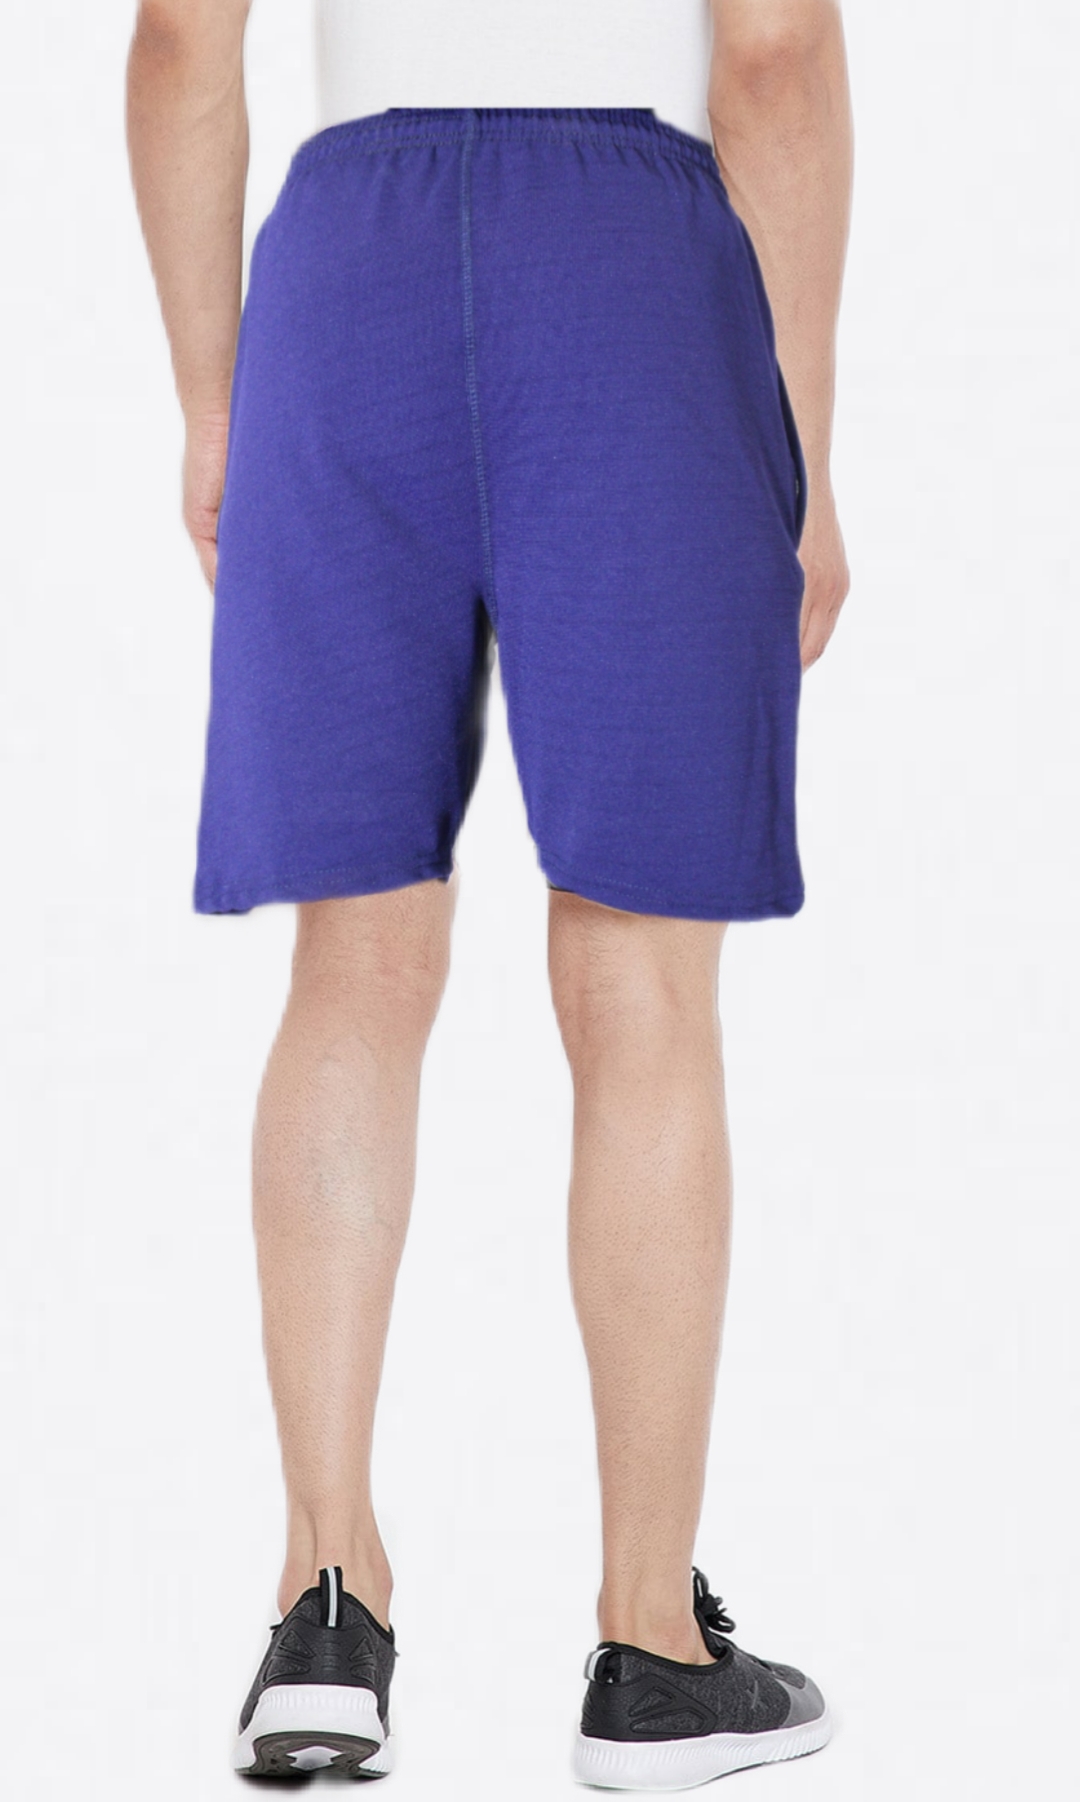 Buy VANTAR Printed Men Blue Boxer Shorts Online - Get 79% Off